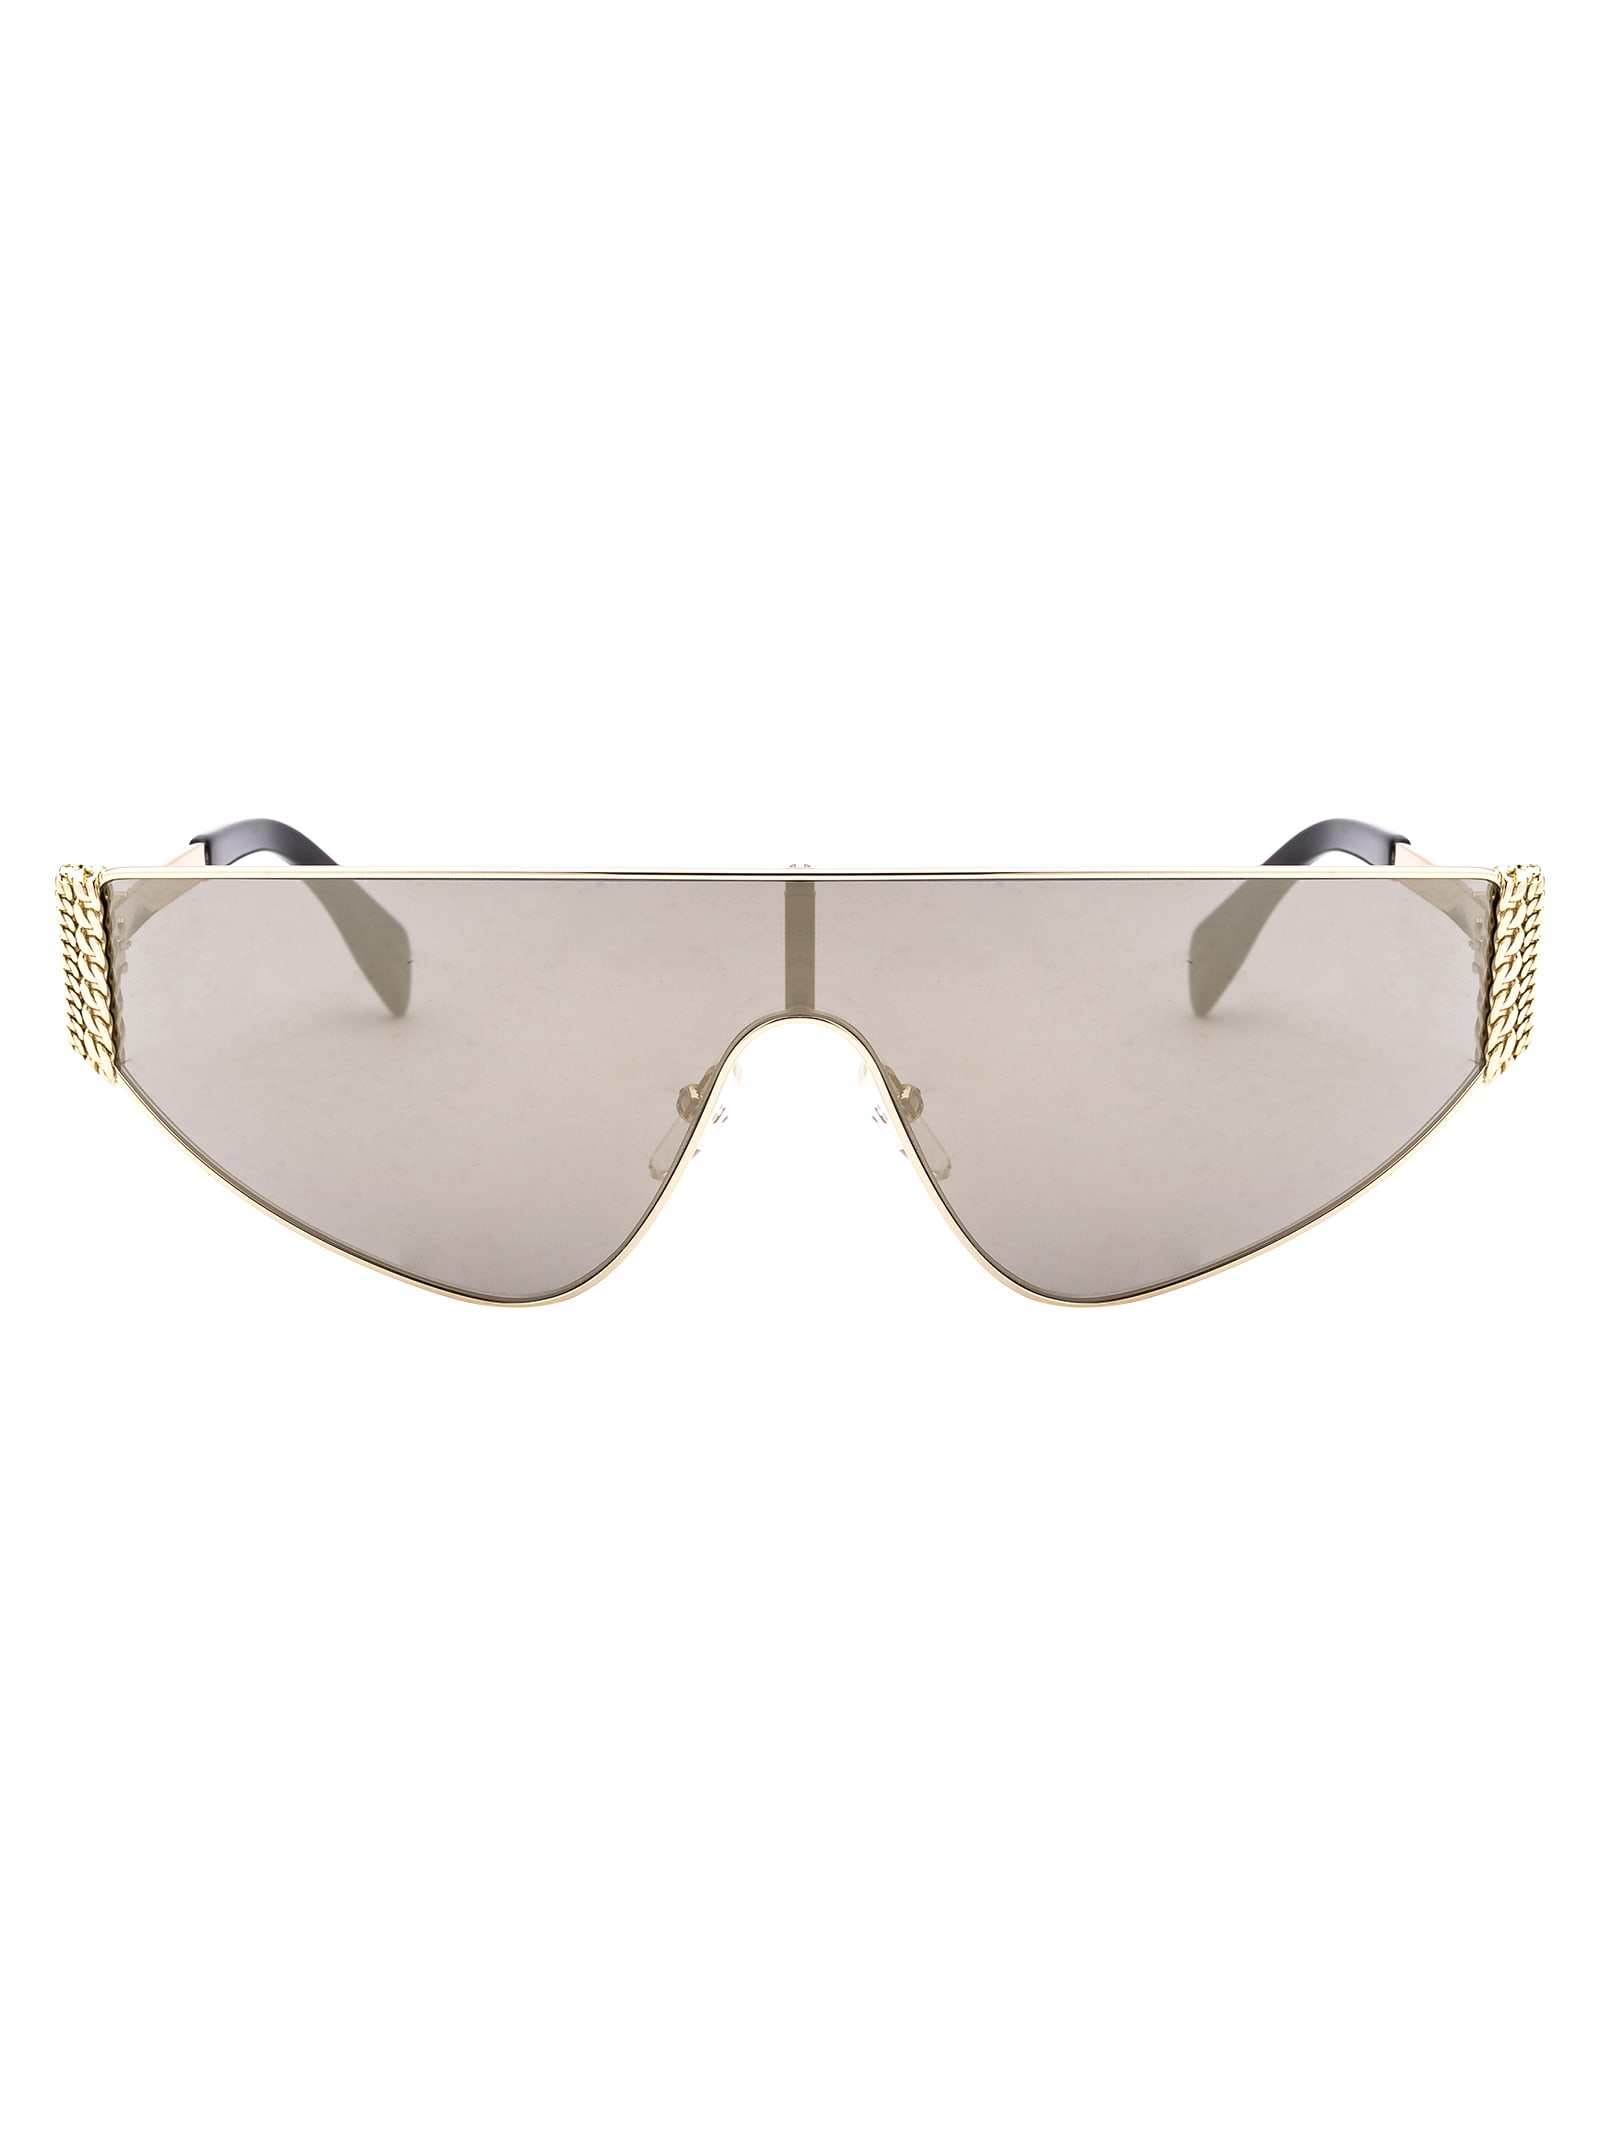 Moschino Mos022/s Sunglasses